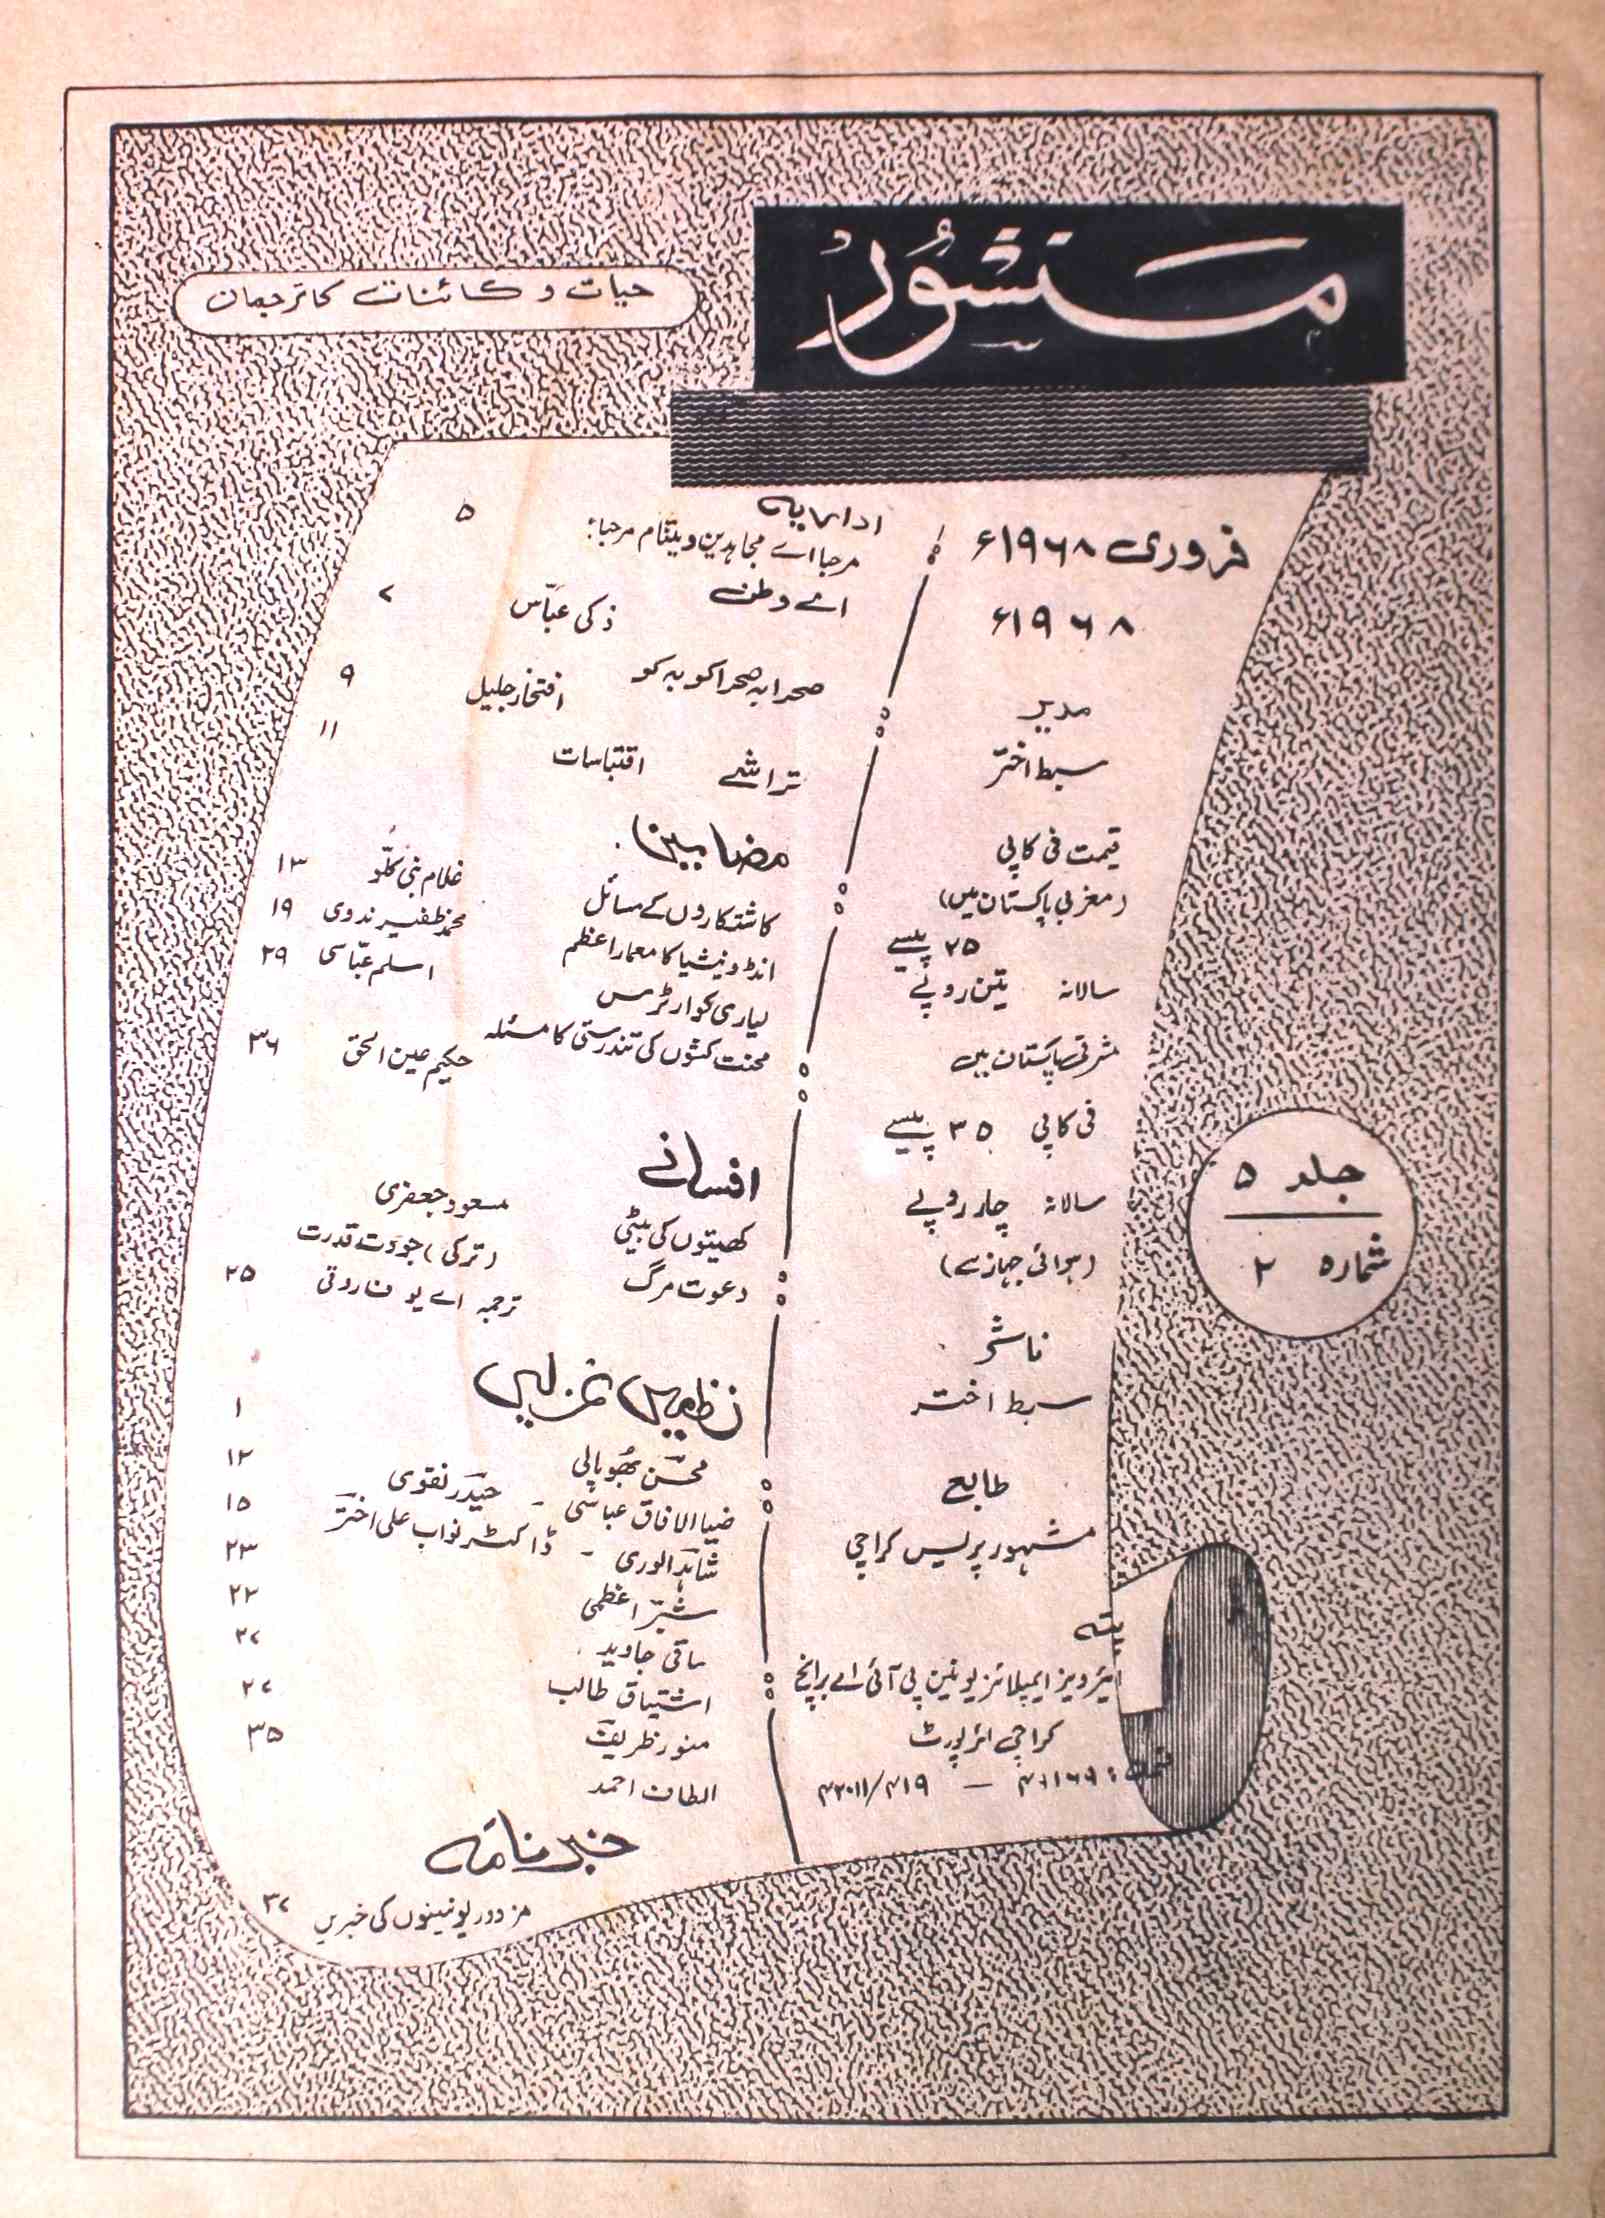 Manshoor Jild.5 No.2 Feb 1968-SVK-Shumara Number-002